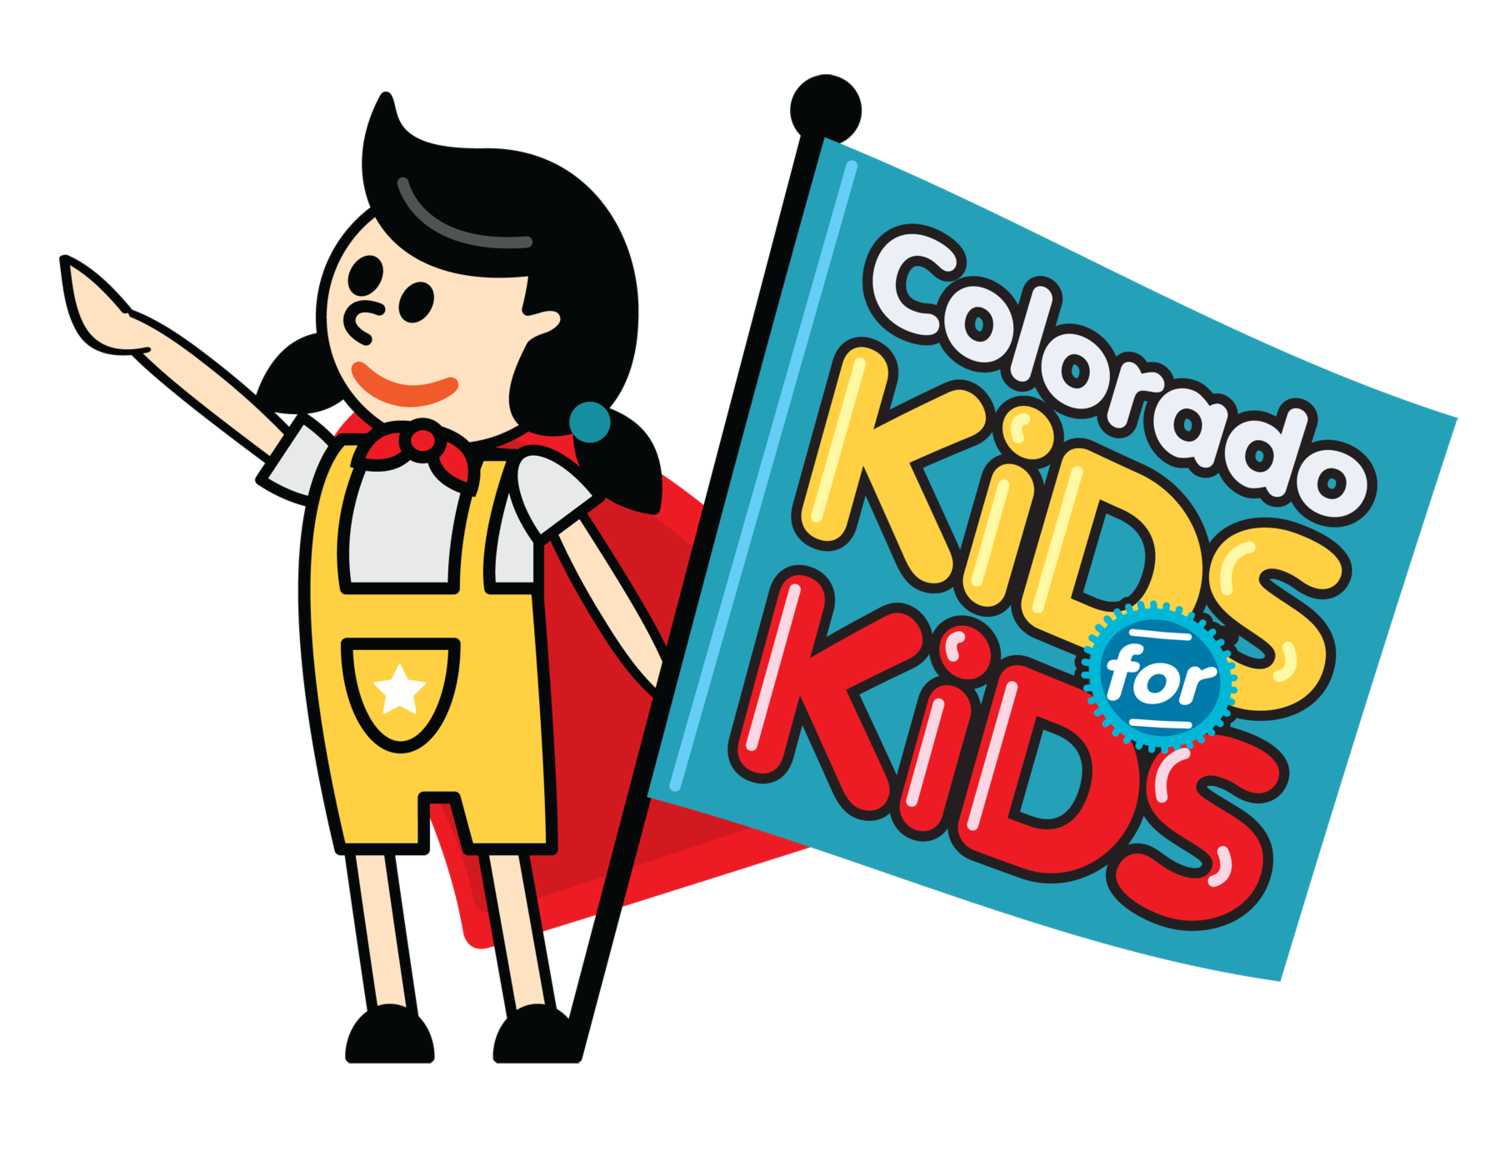 Colorado Kids for Kids 